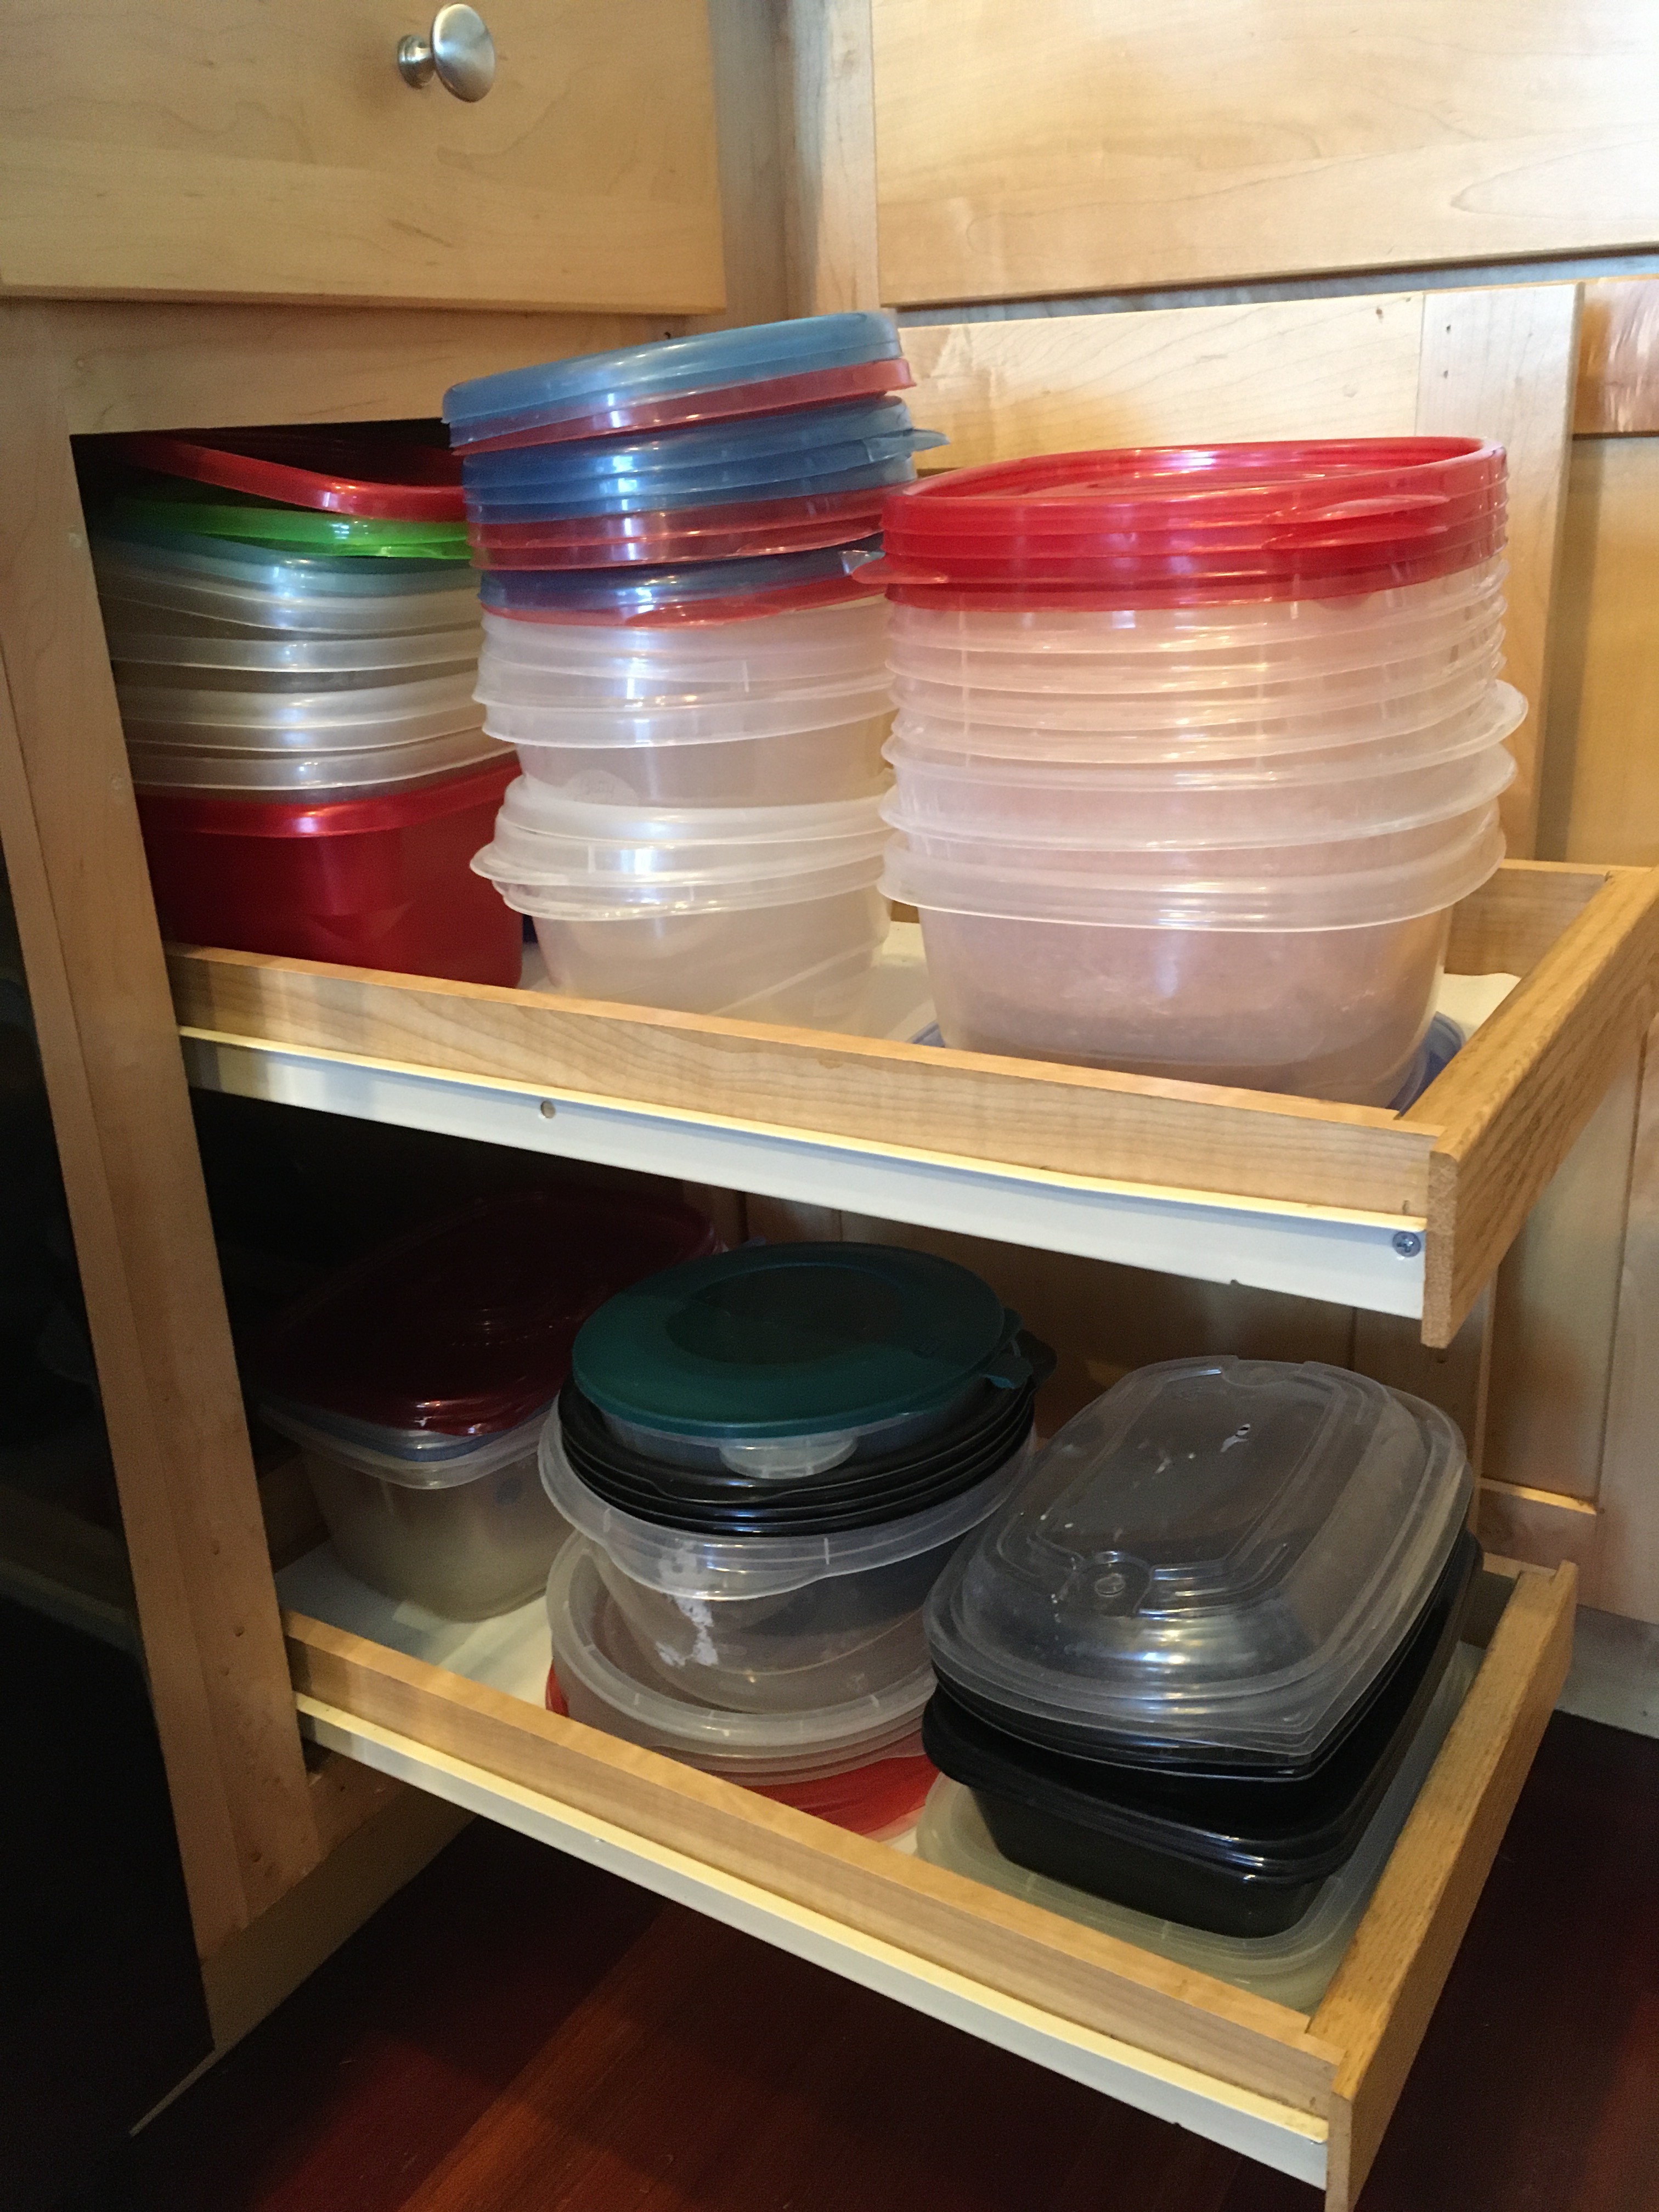 How to Organize Tupperware